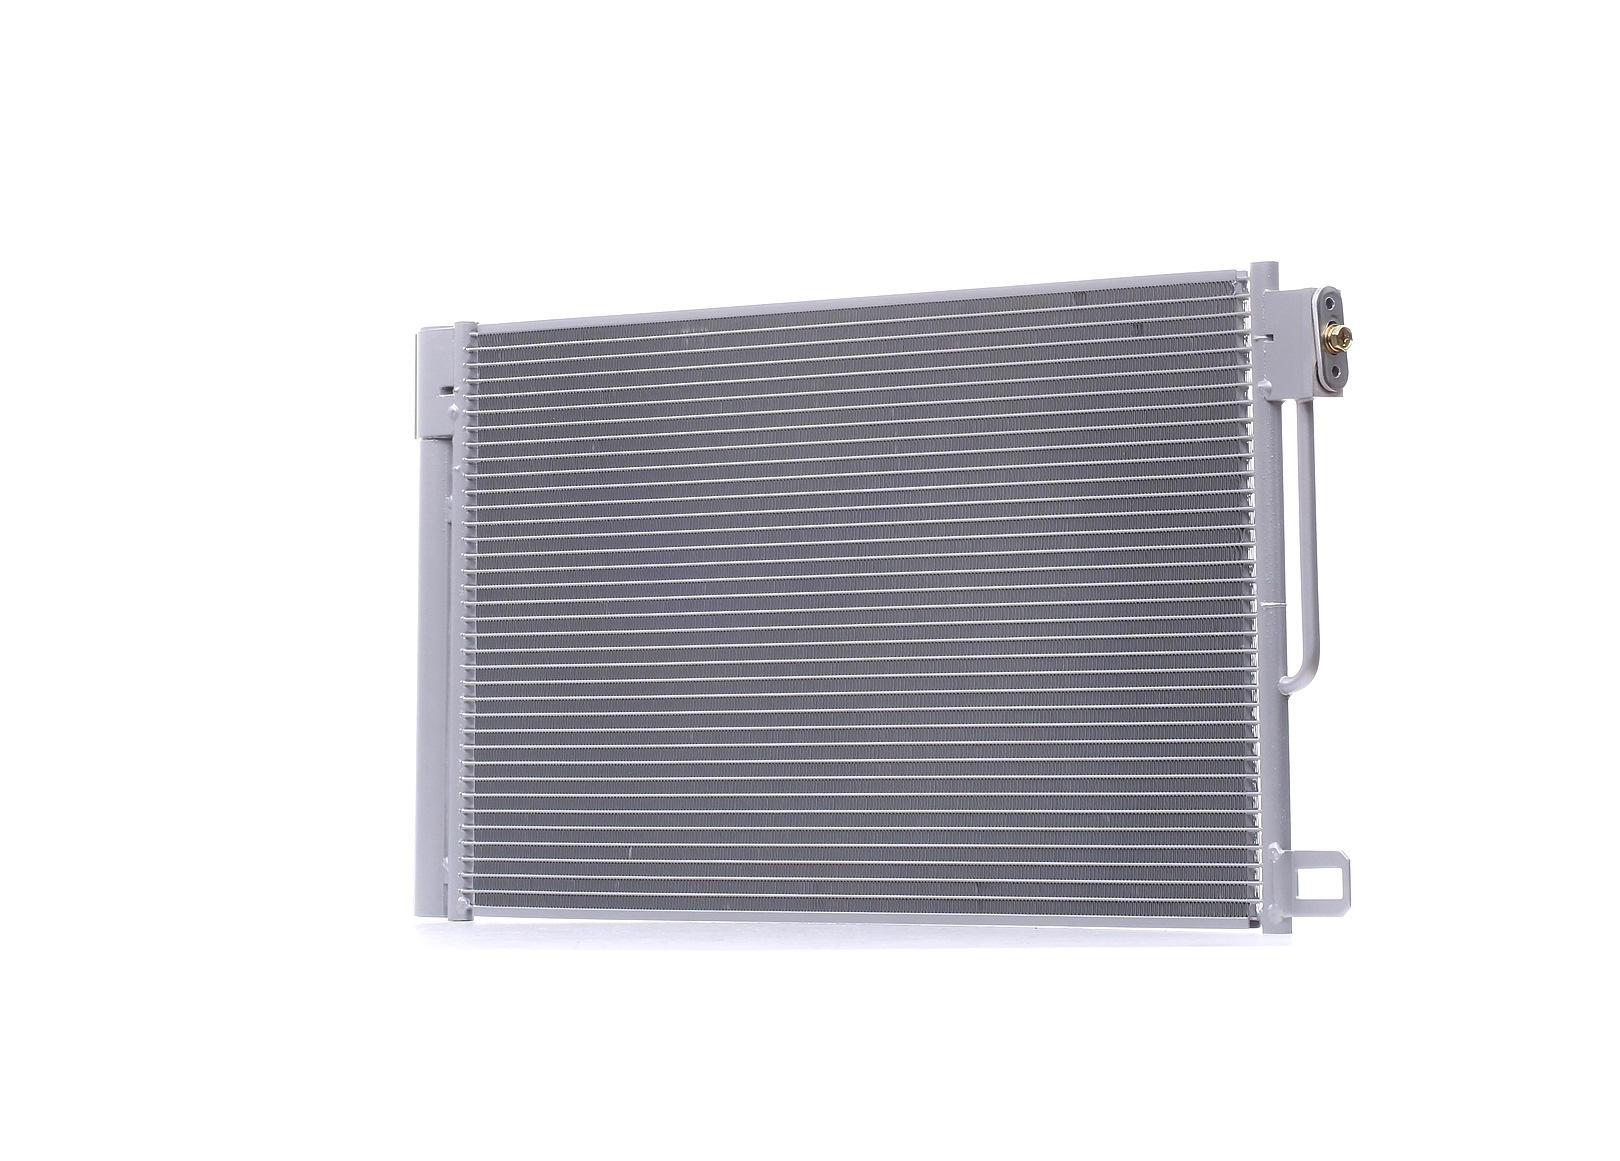 NISSENS 94973 Air conditioning condenser with dryer, Aluminium, 600mm, R 134a, R 1234yf